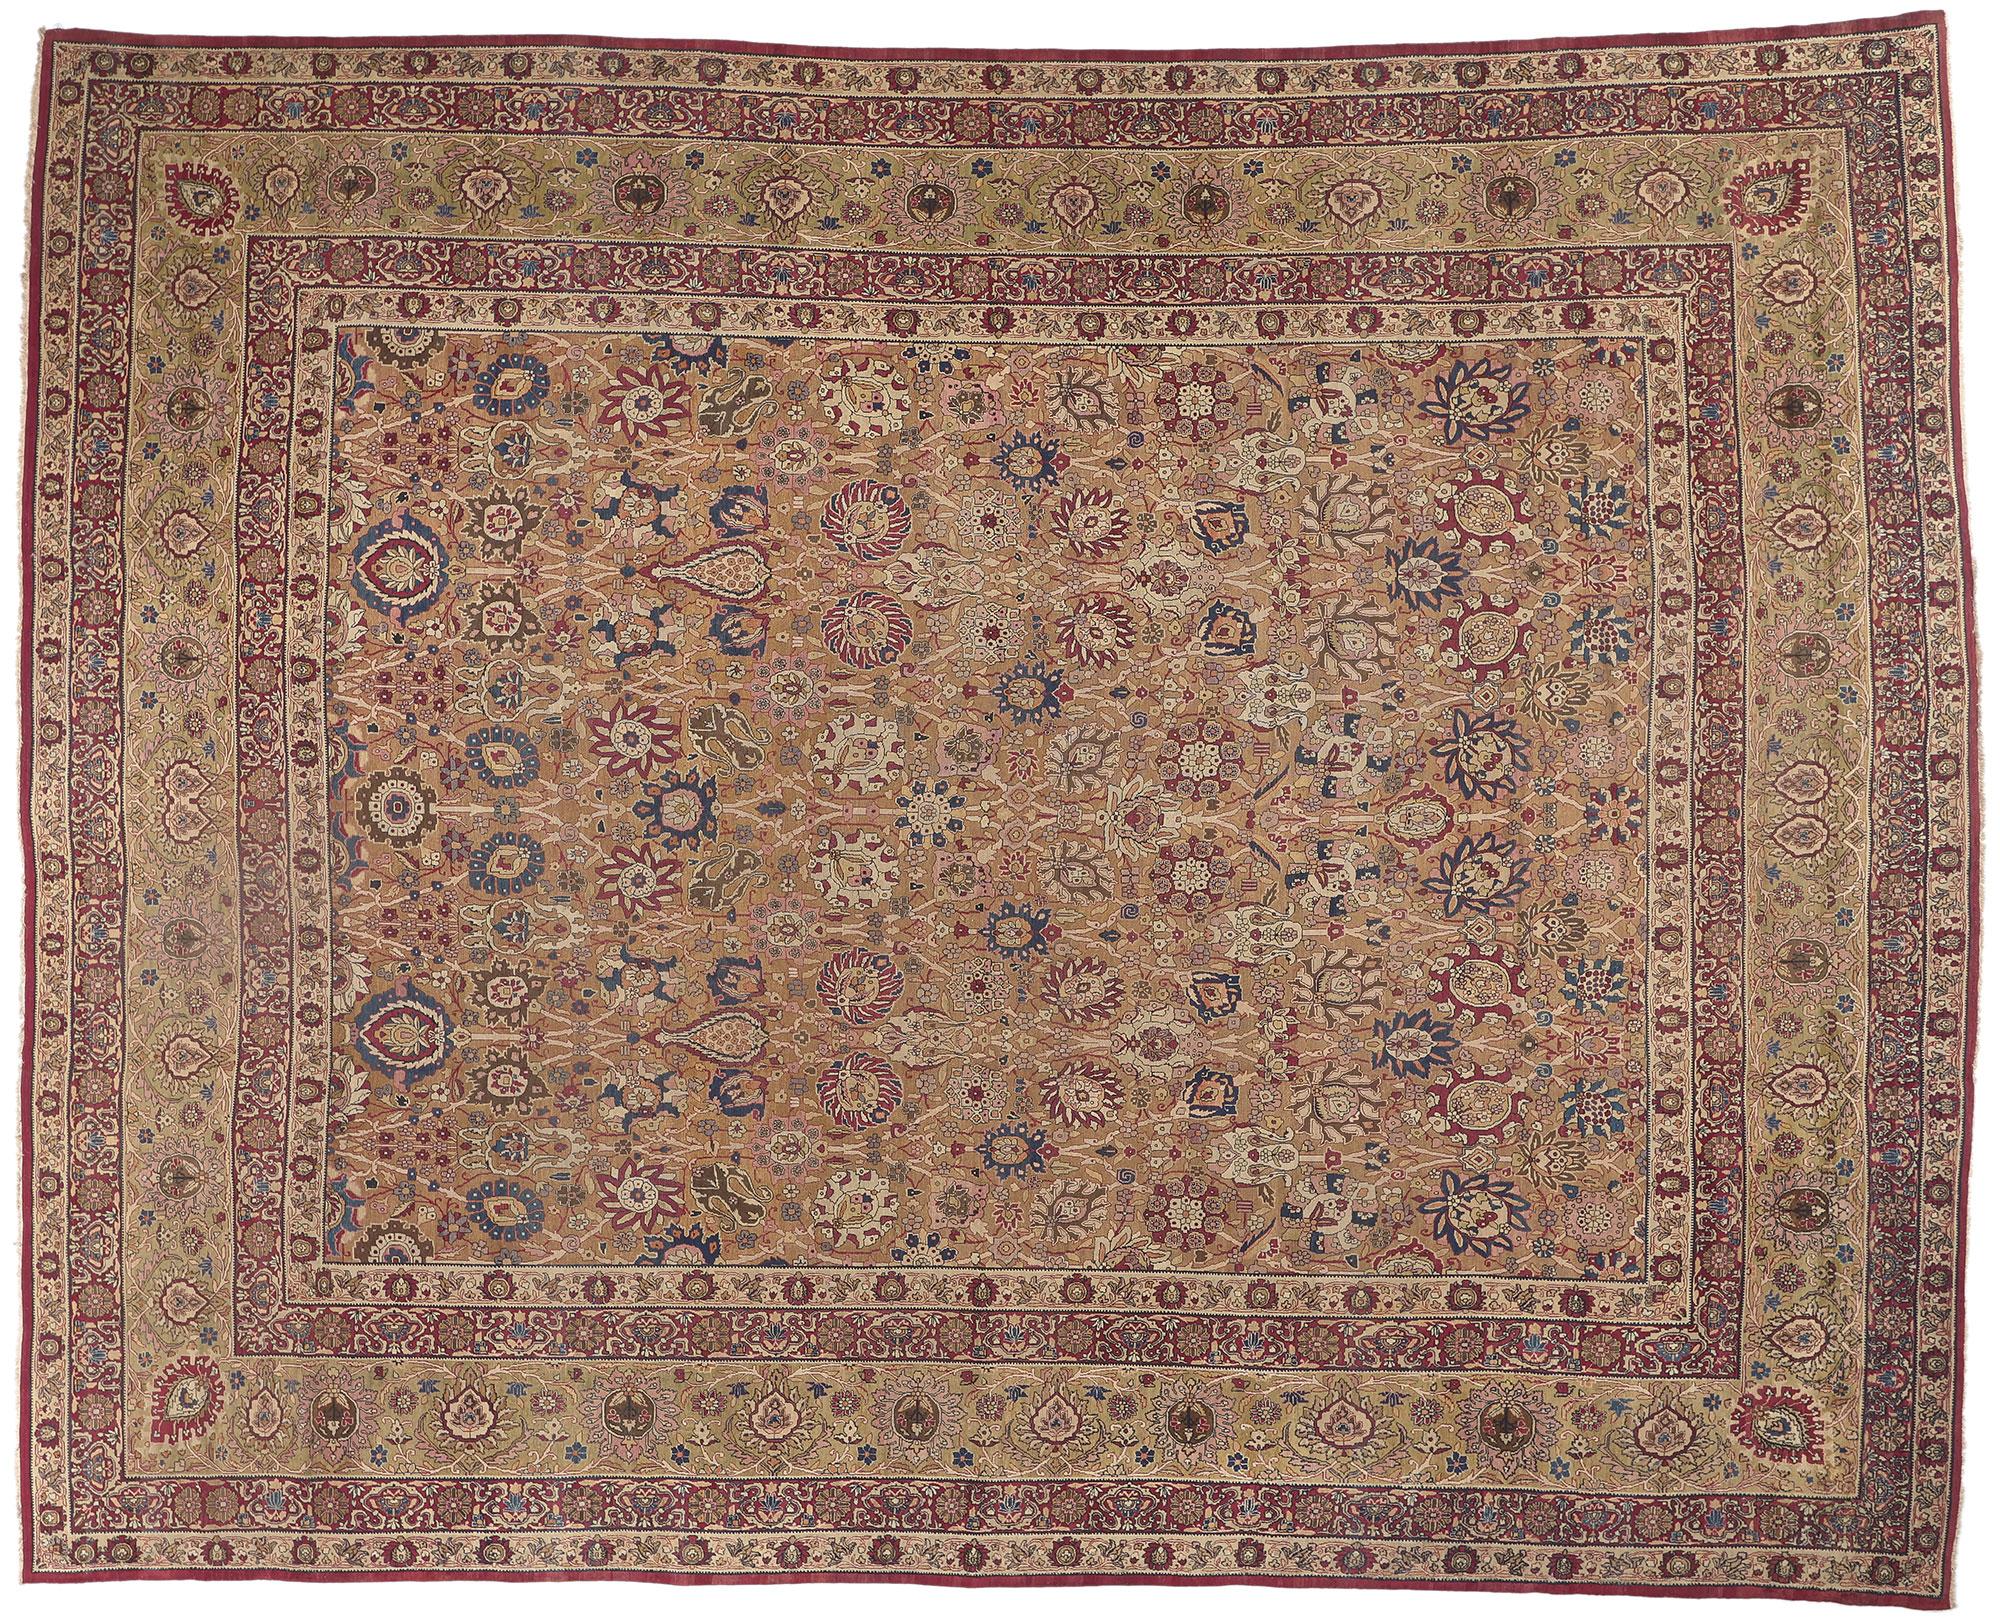 1880s Oversized Antique Persian Kermanshah Rug For Sale 3